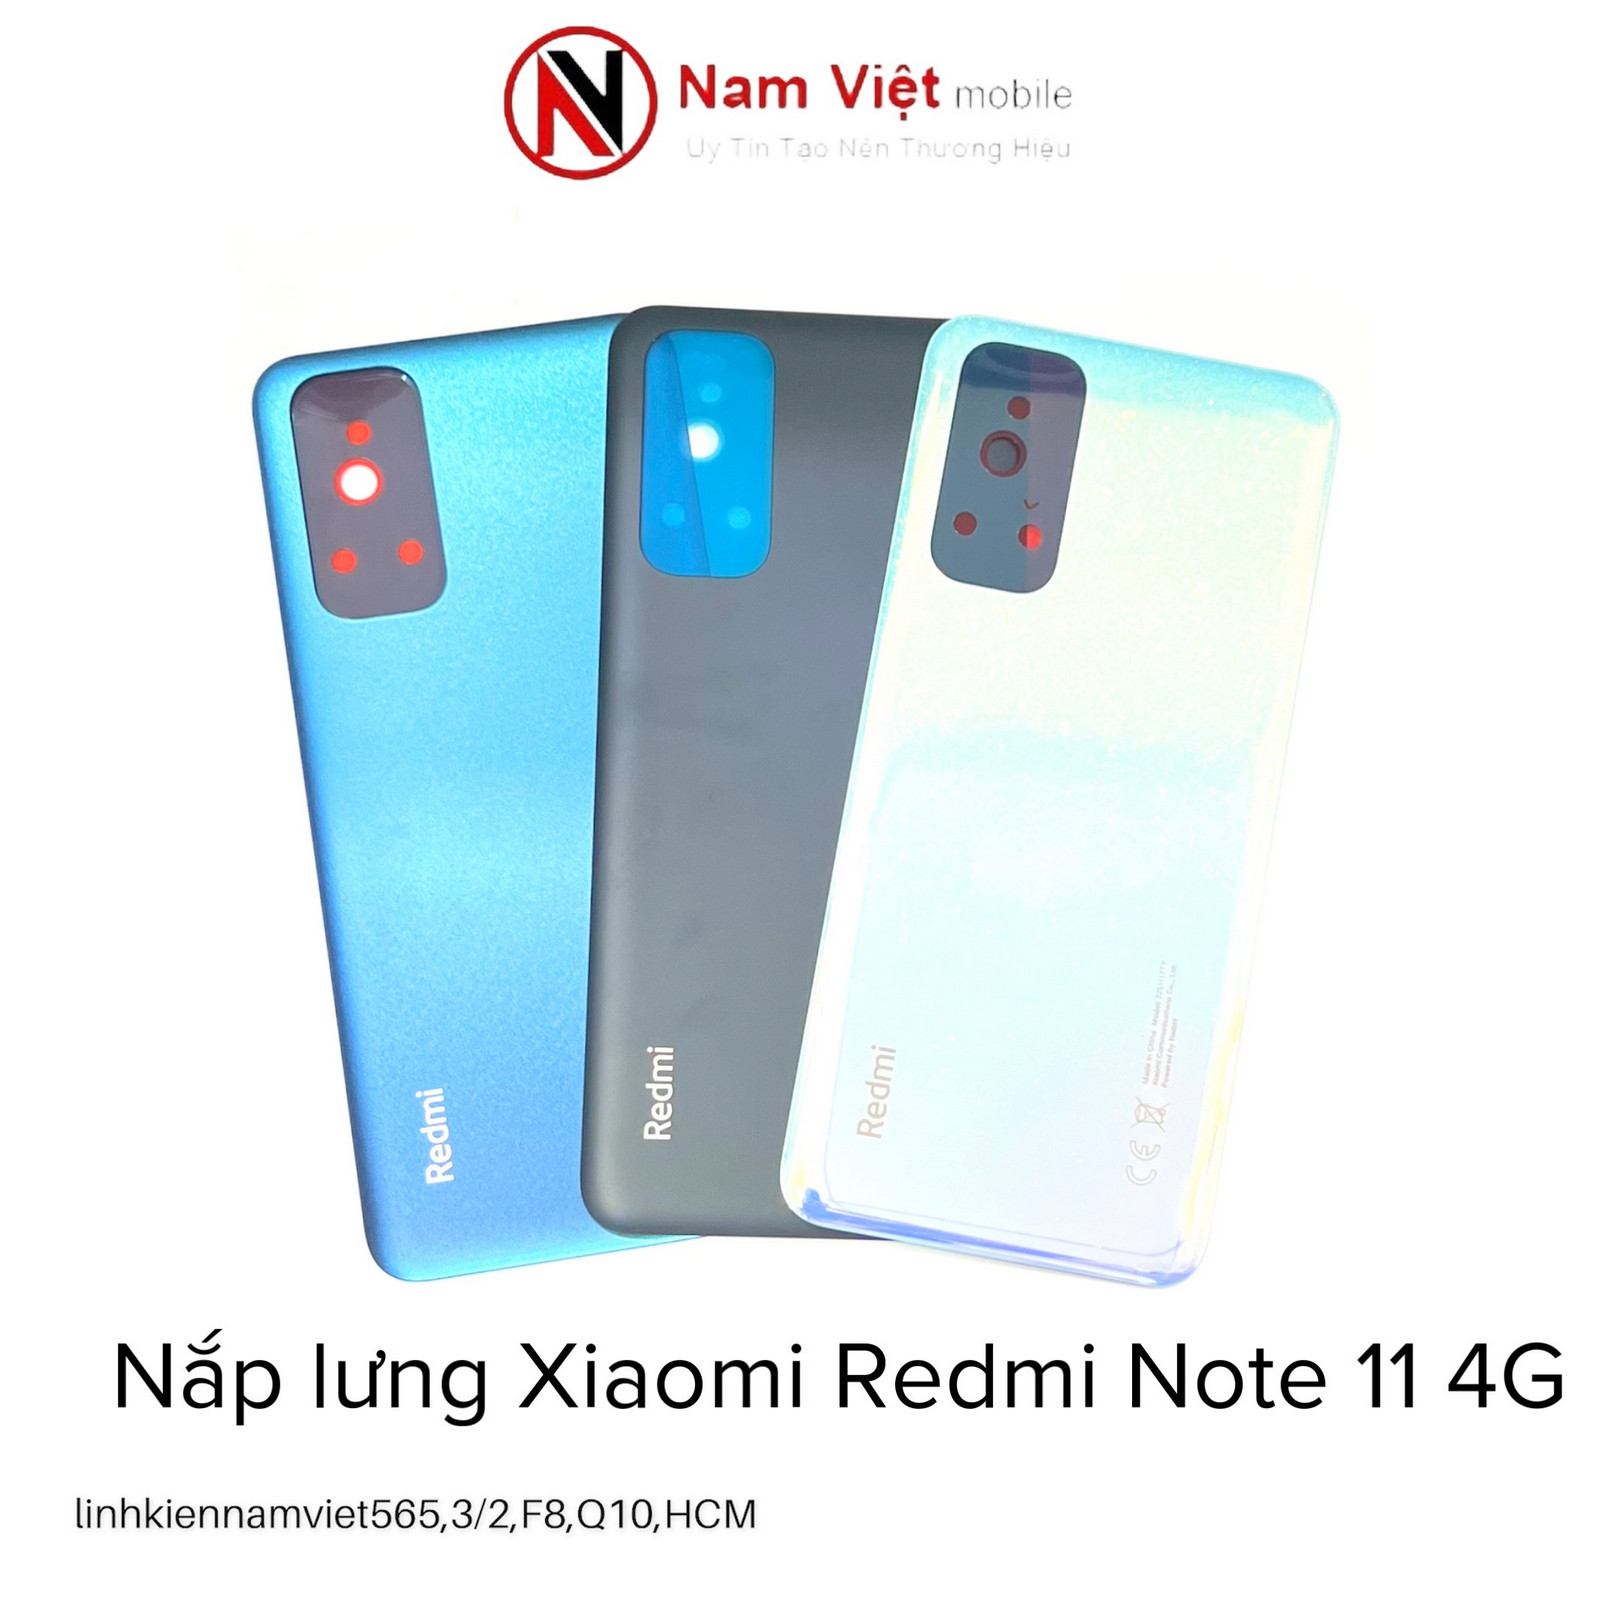 Nap-lung-Xiaomi-Redmi-Note-11-4G